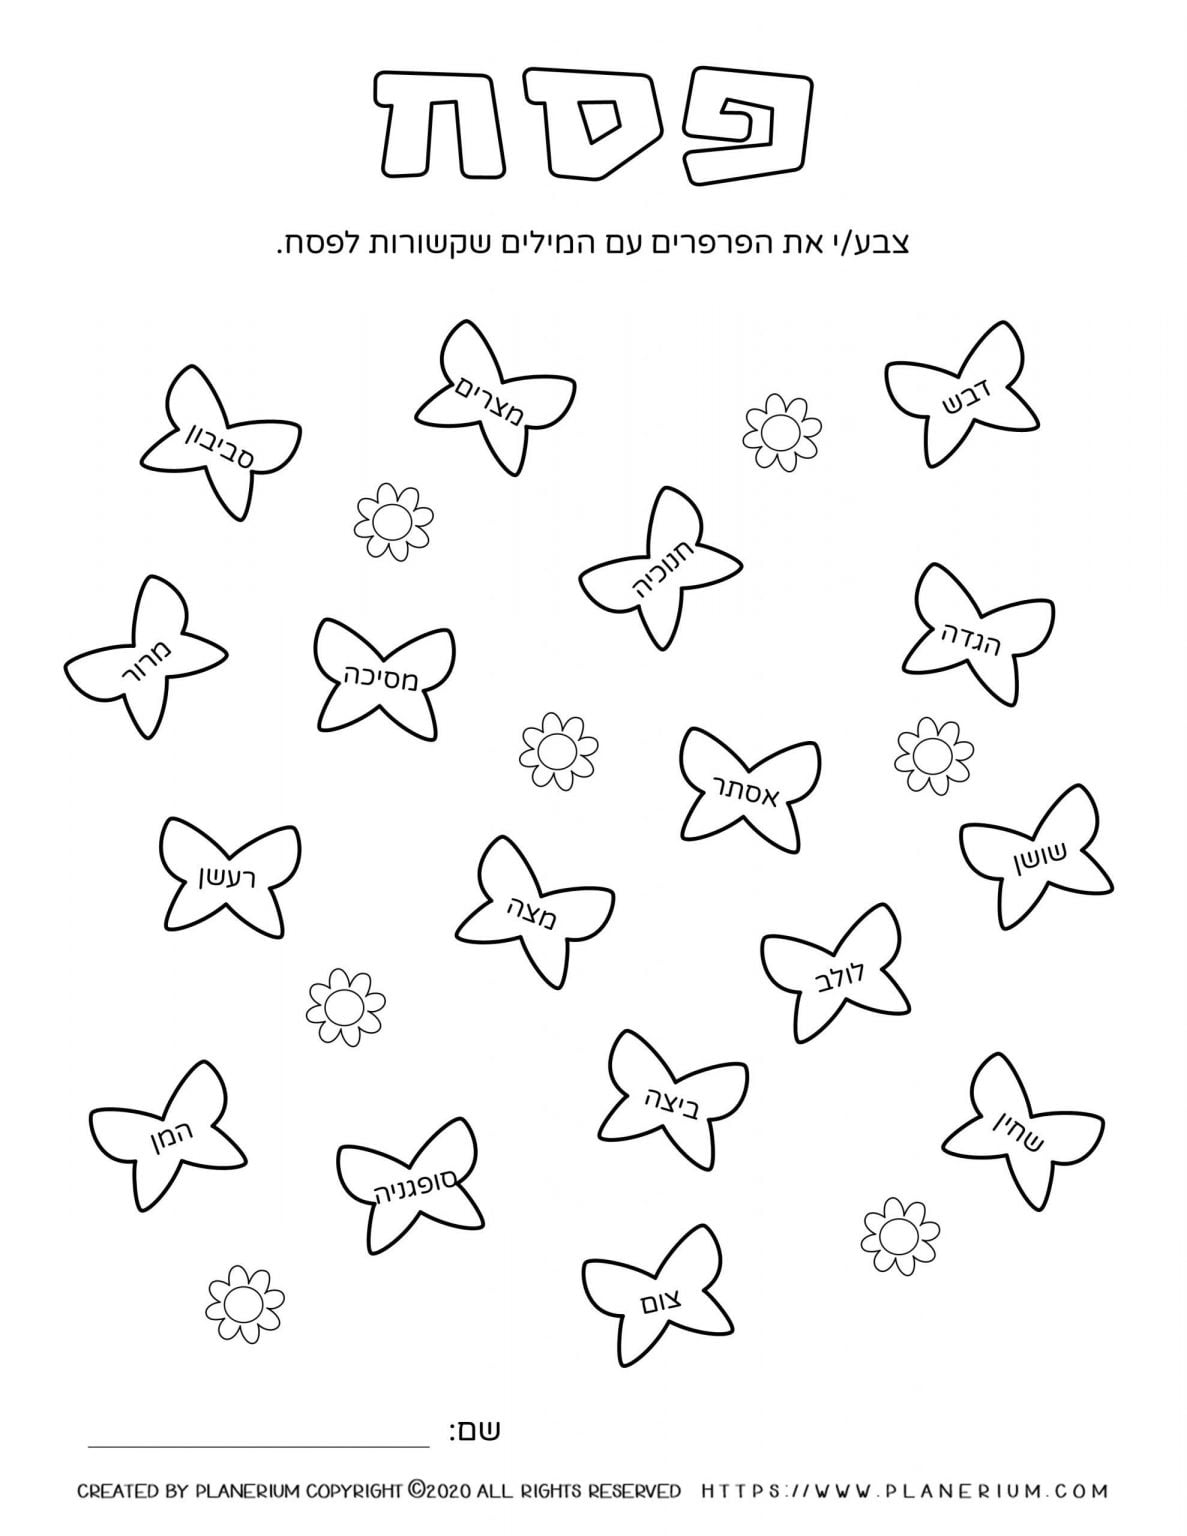 Passover worksheet - Related words on butterflies - Hebrew